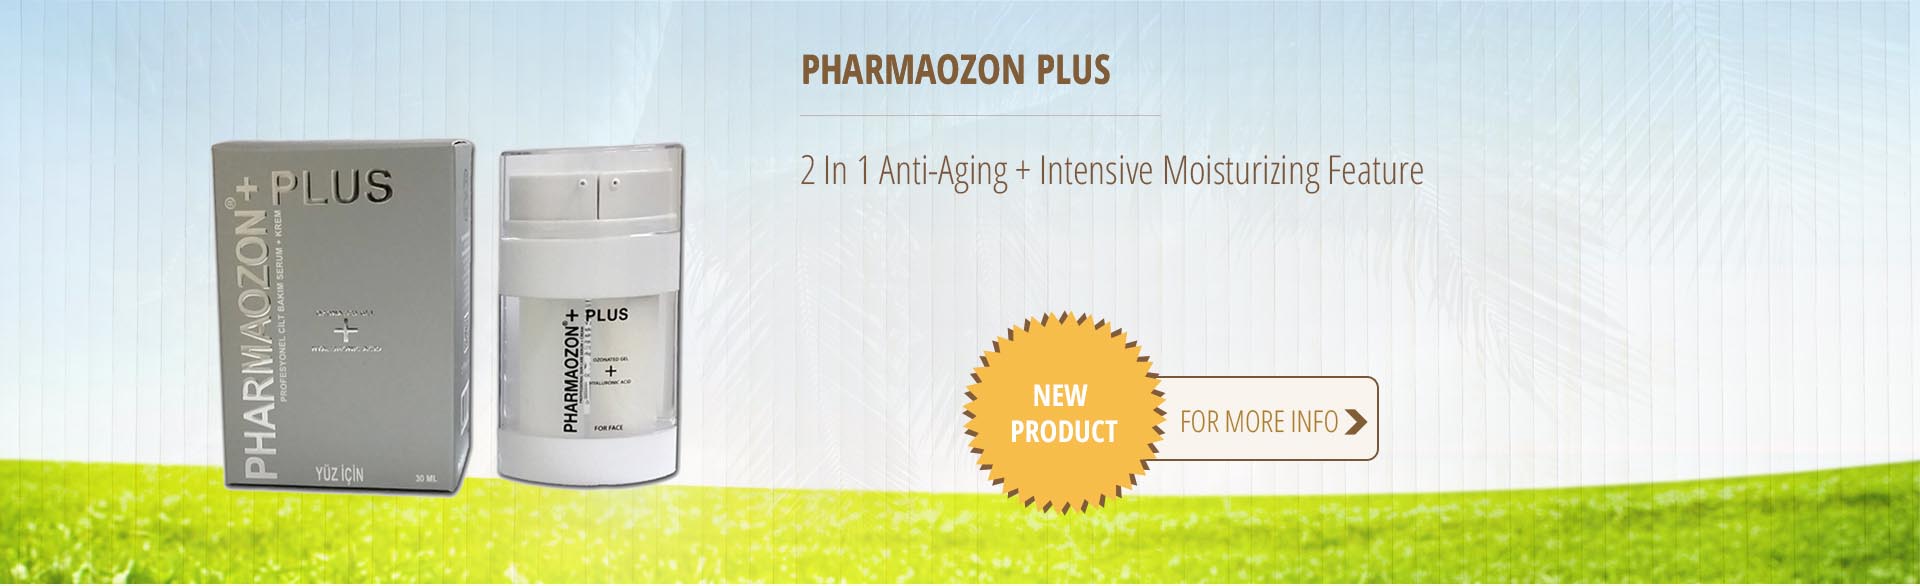 Professionel Skin Care Products - Pharmaozon